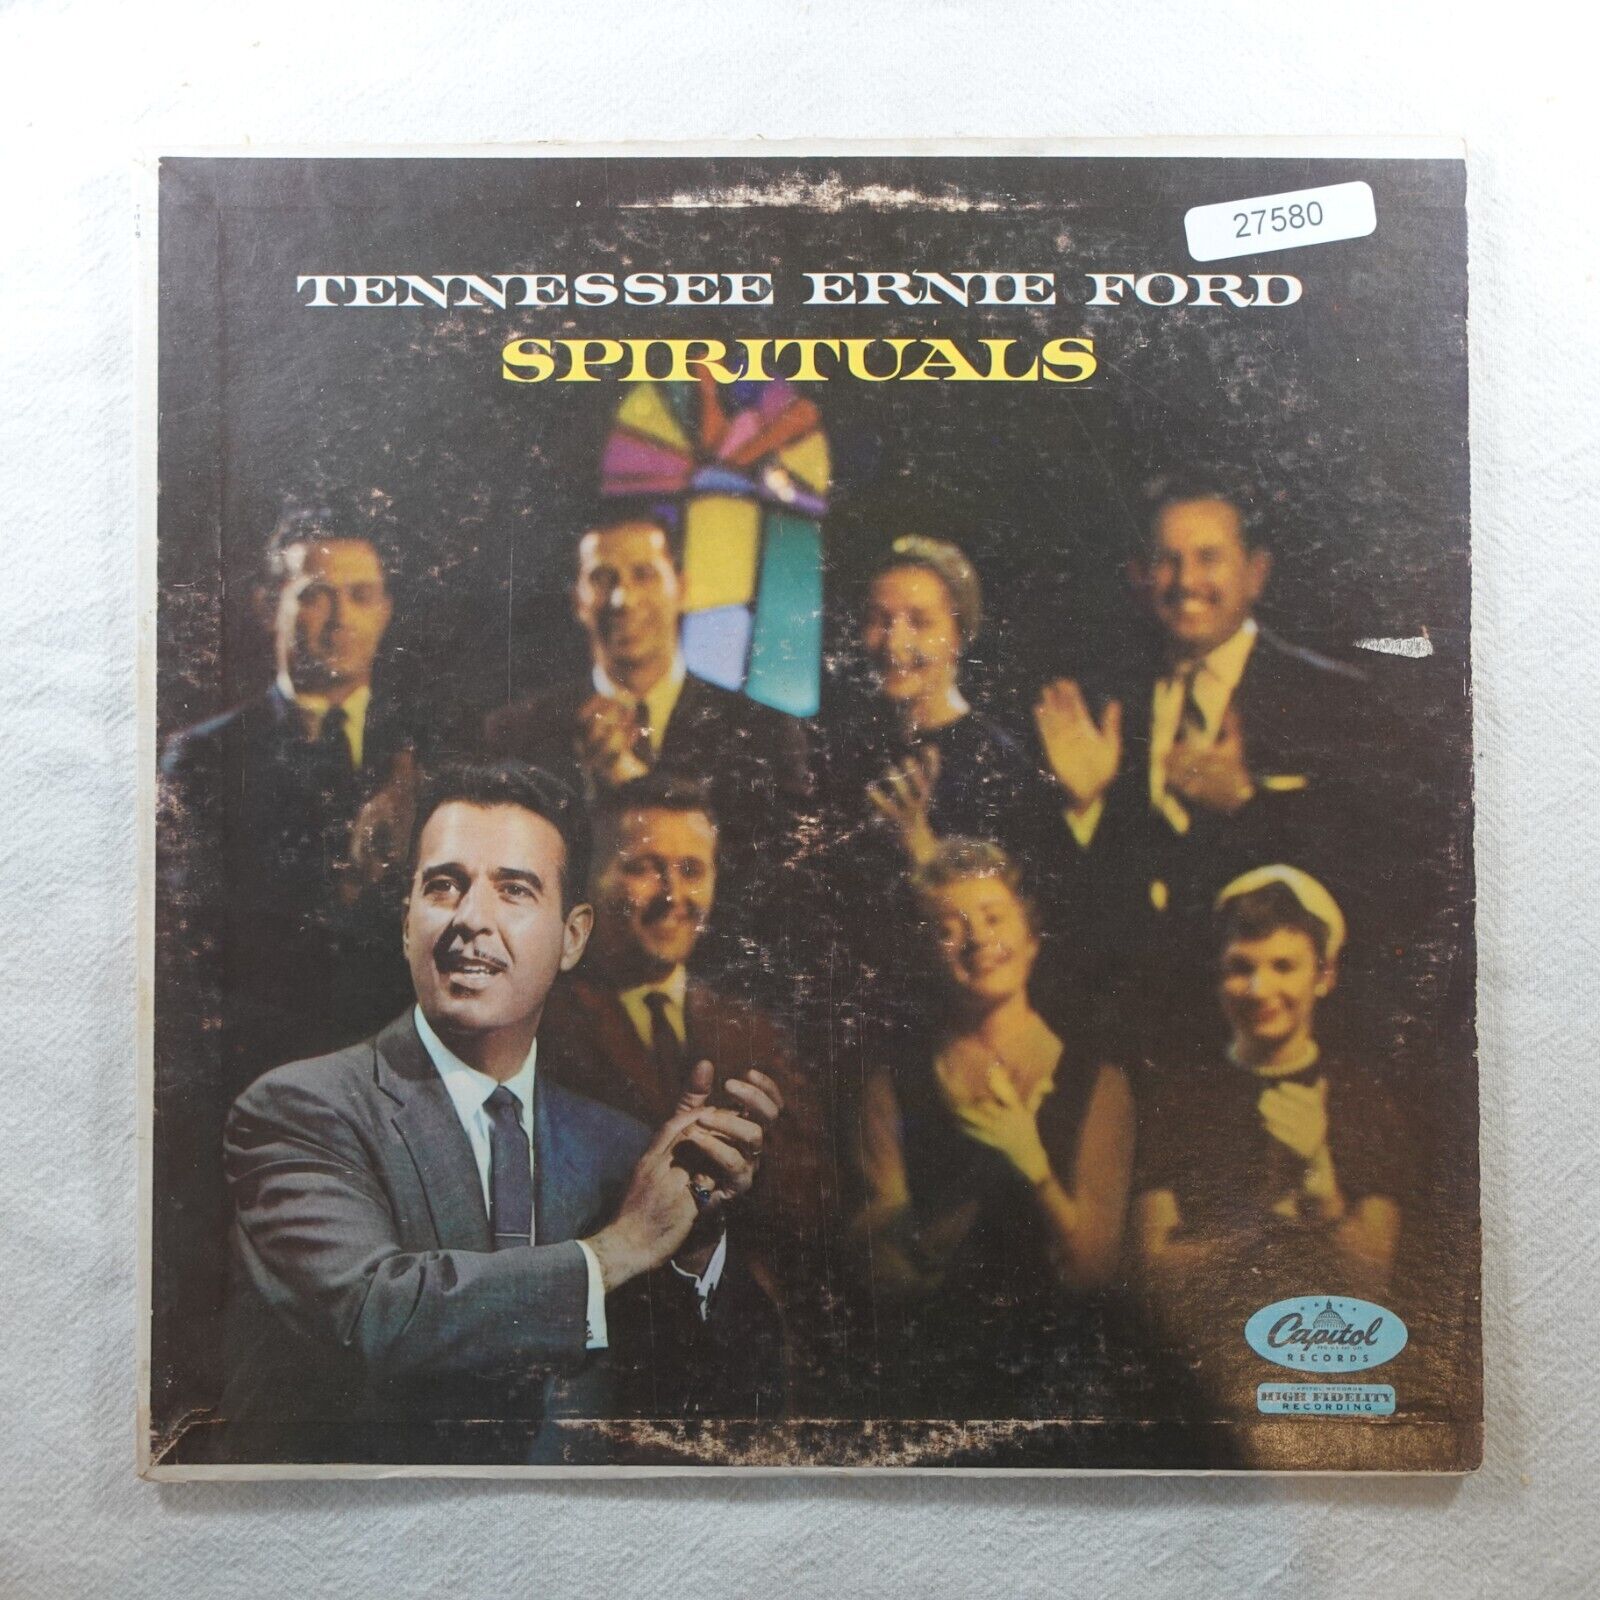 Tennessee Ernie Ford Spirituals LP Vinyl Record Album